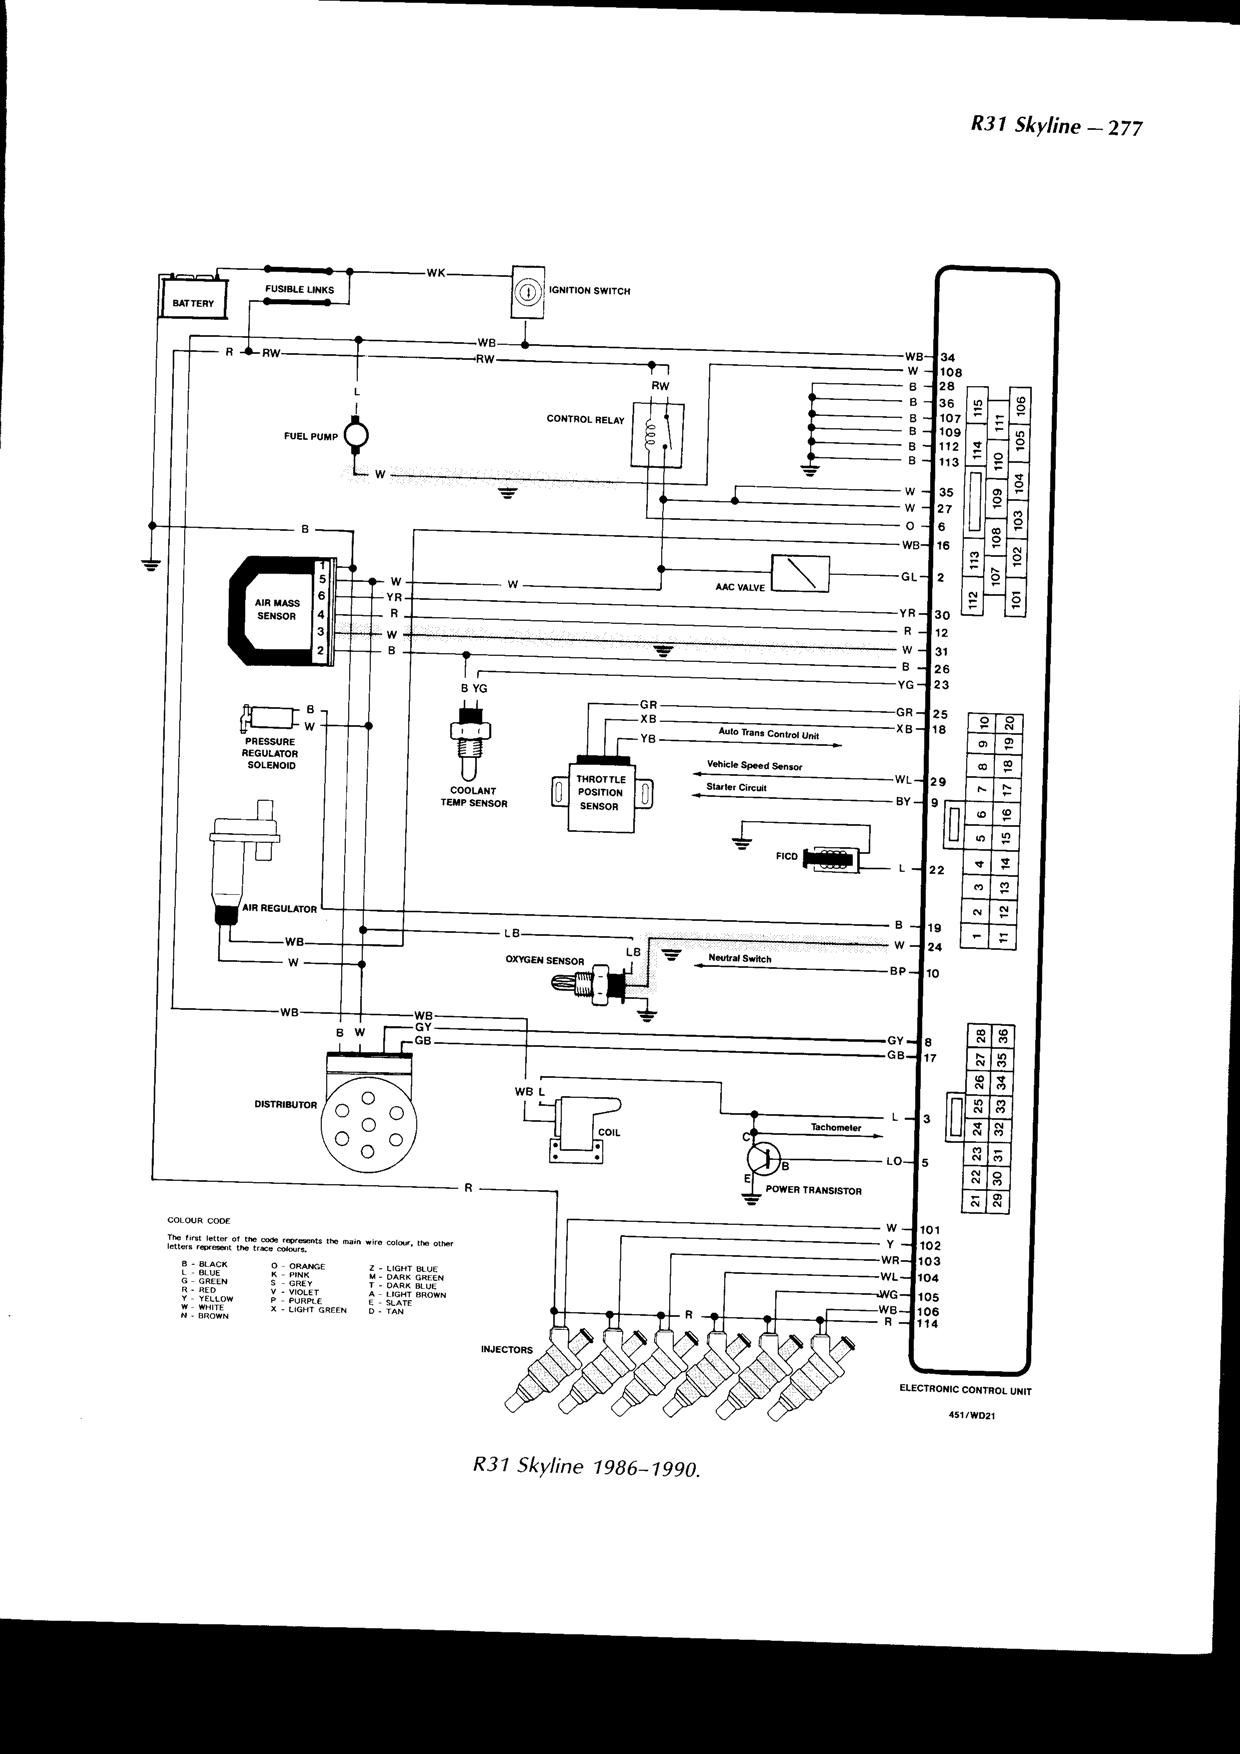 2018 Mercury 115 Prxs Ignition Switch Diagram 536e0 Nissan 1400 Ignition Wiring Diagram Of 2018 Mercury 115 Prxs Ignition Switch Diagram